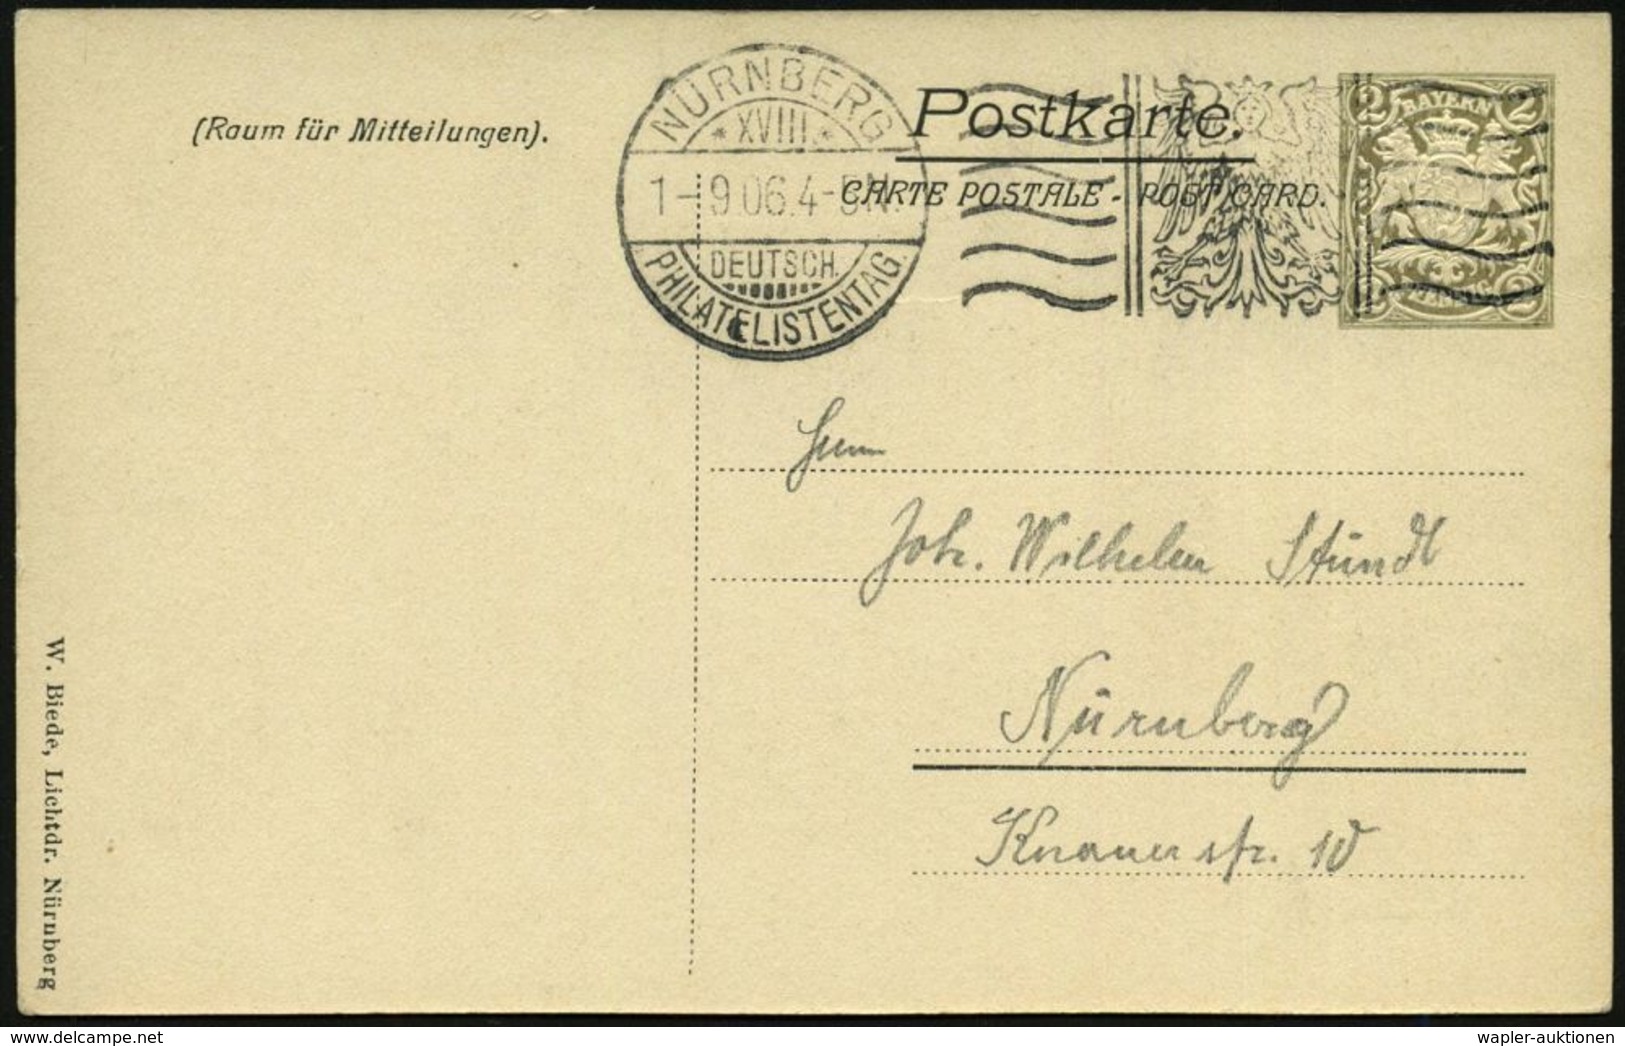 NÜRNBERG/ XVIII/ DEUTSCH./ PHILATELISTENTAG 1906 (1.9.) FaWSt = Jungfernadler + 2x 6 Wellen Auf PP 2 Pf. Wappen Grau: 18 - Filatelistische Tentoonstellingen